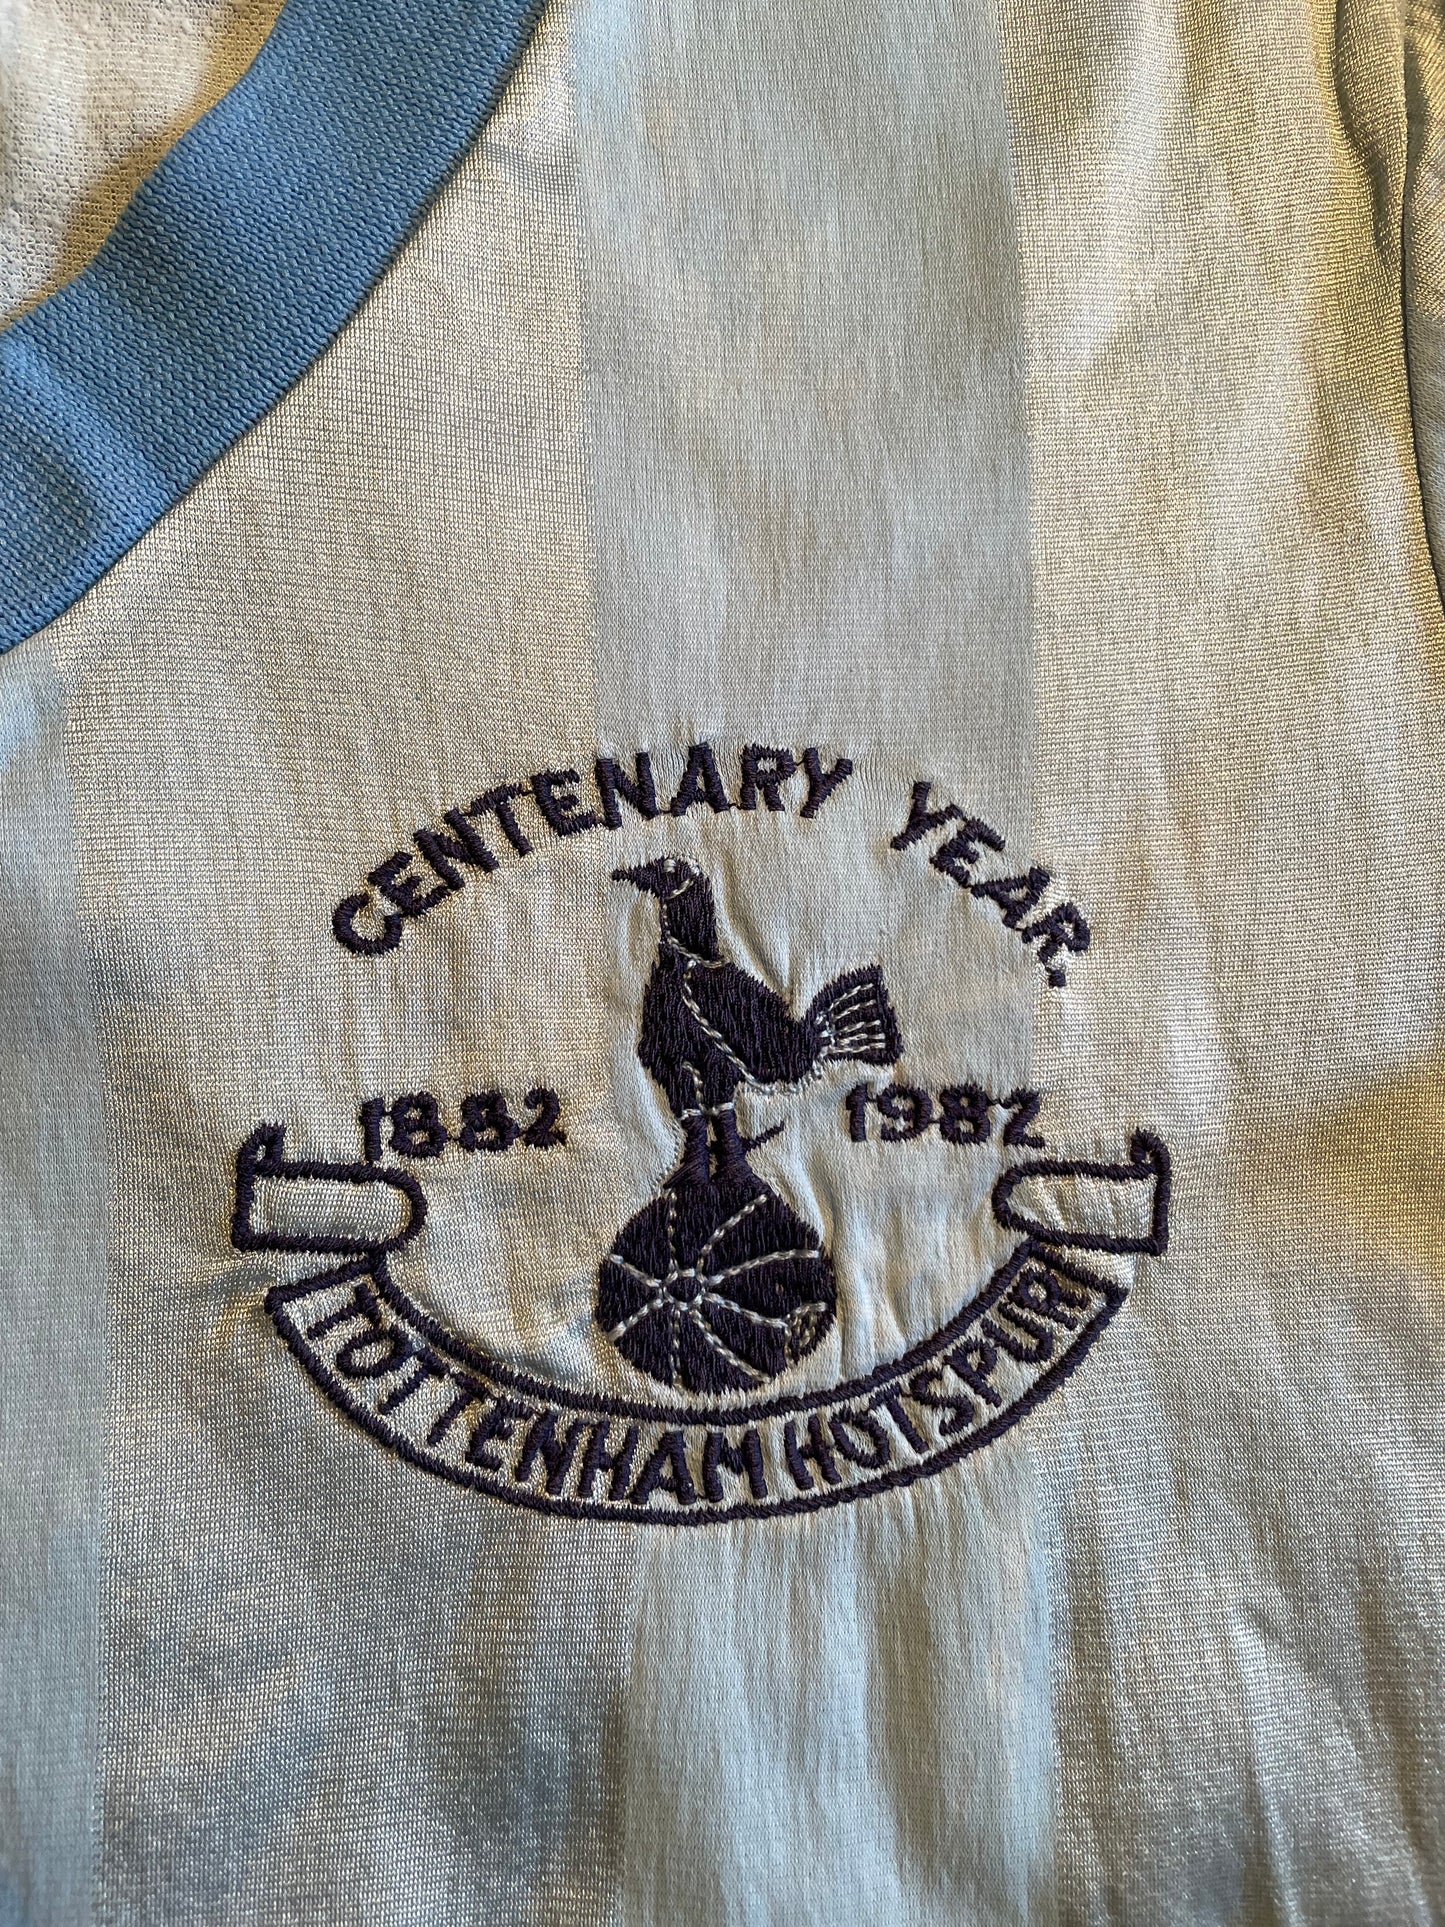 Tottenham 1982 Away Shirt (excellent) Youths 10-12. Height 17 inch